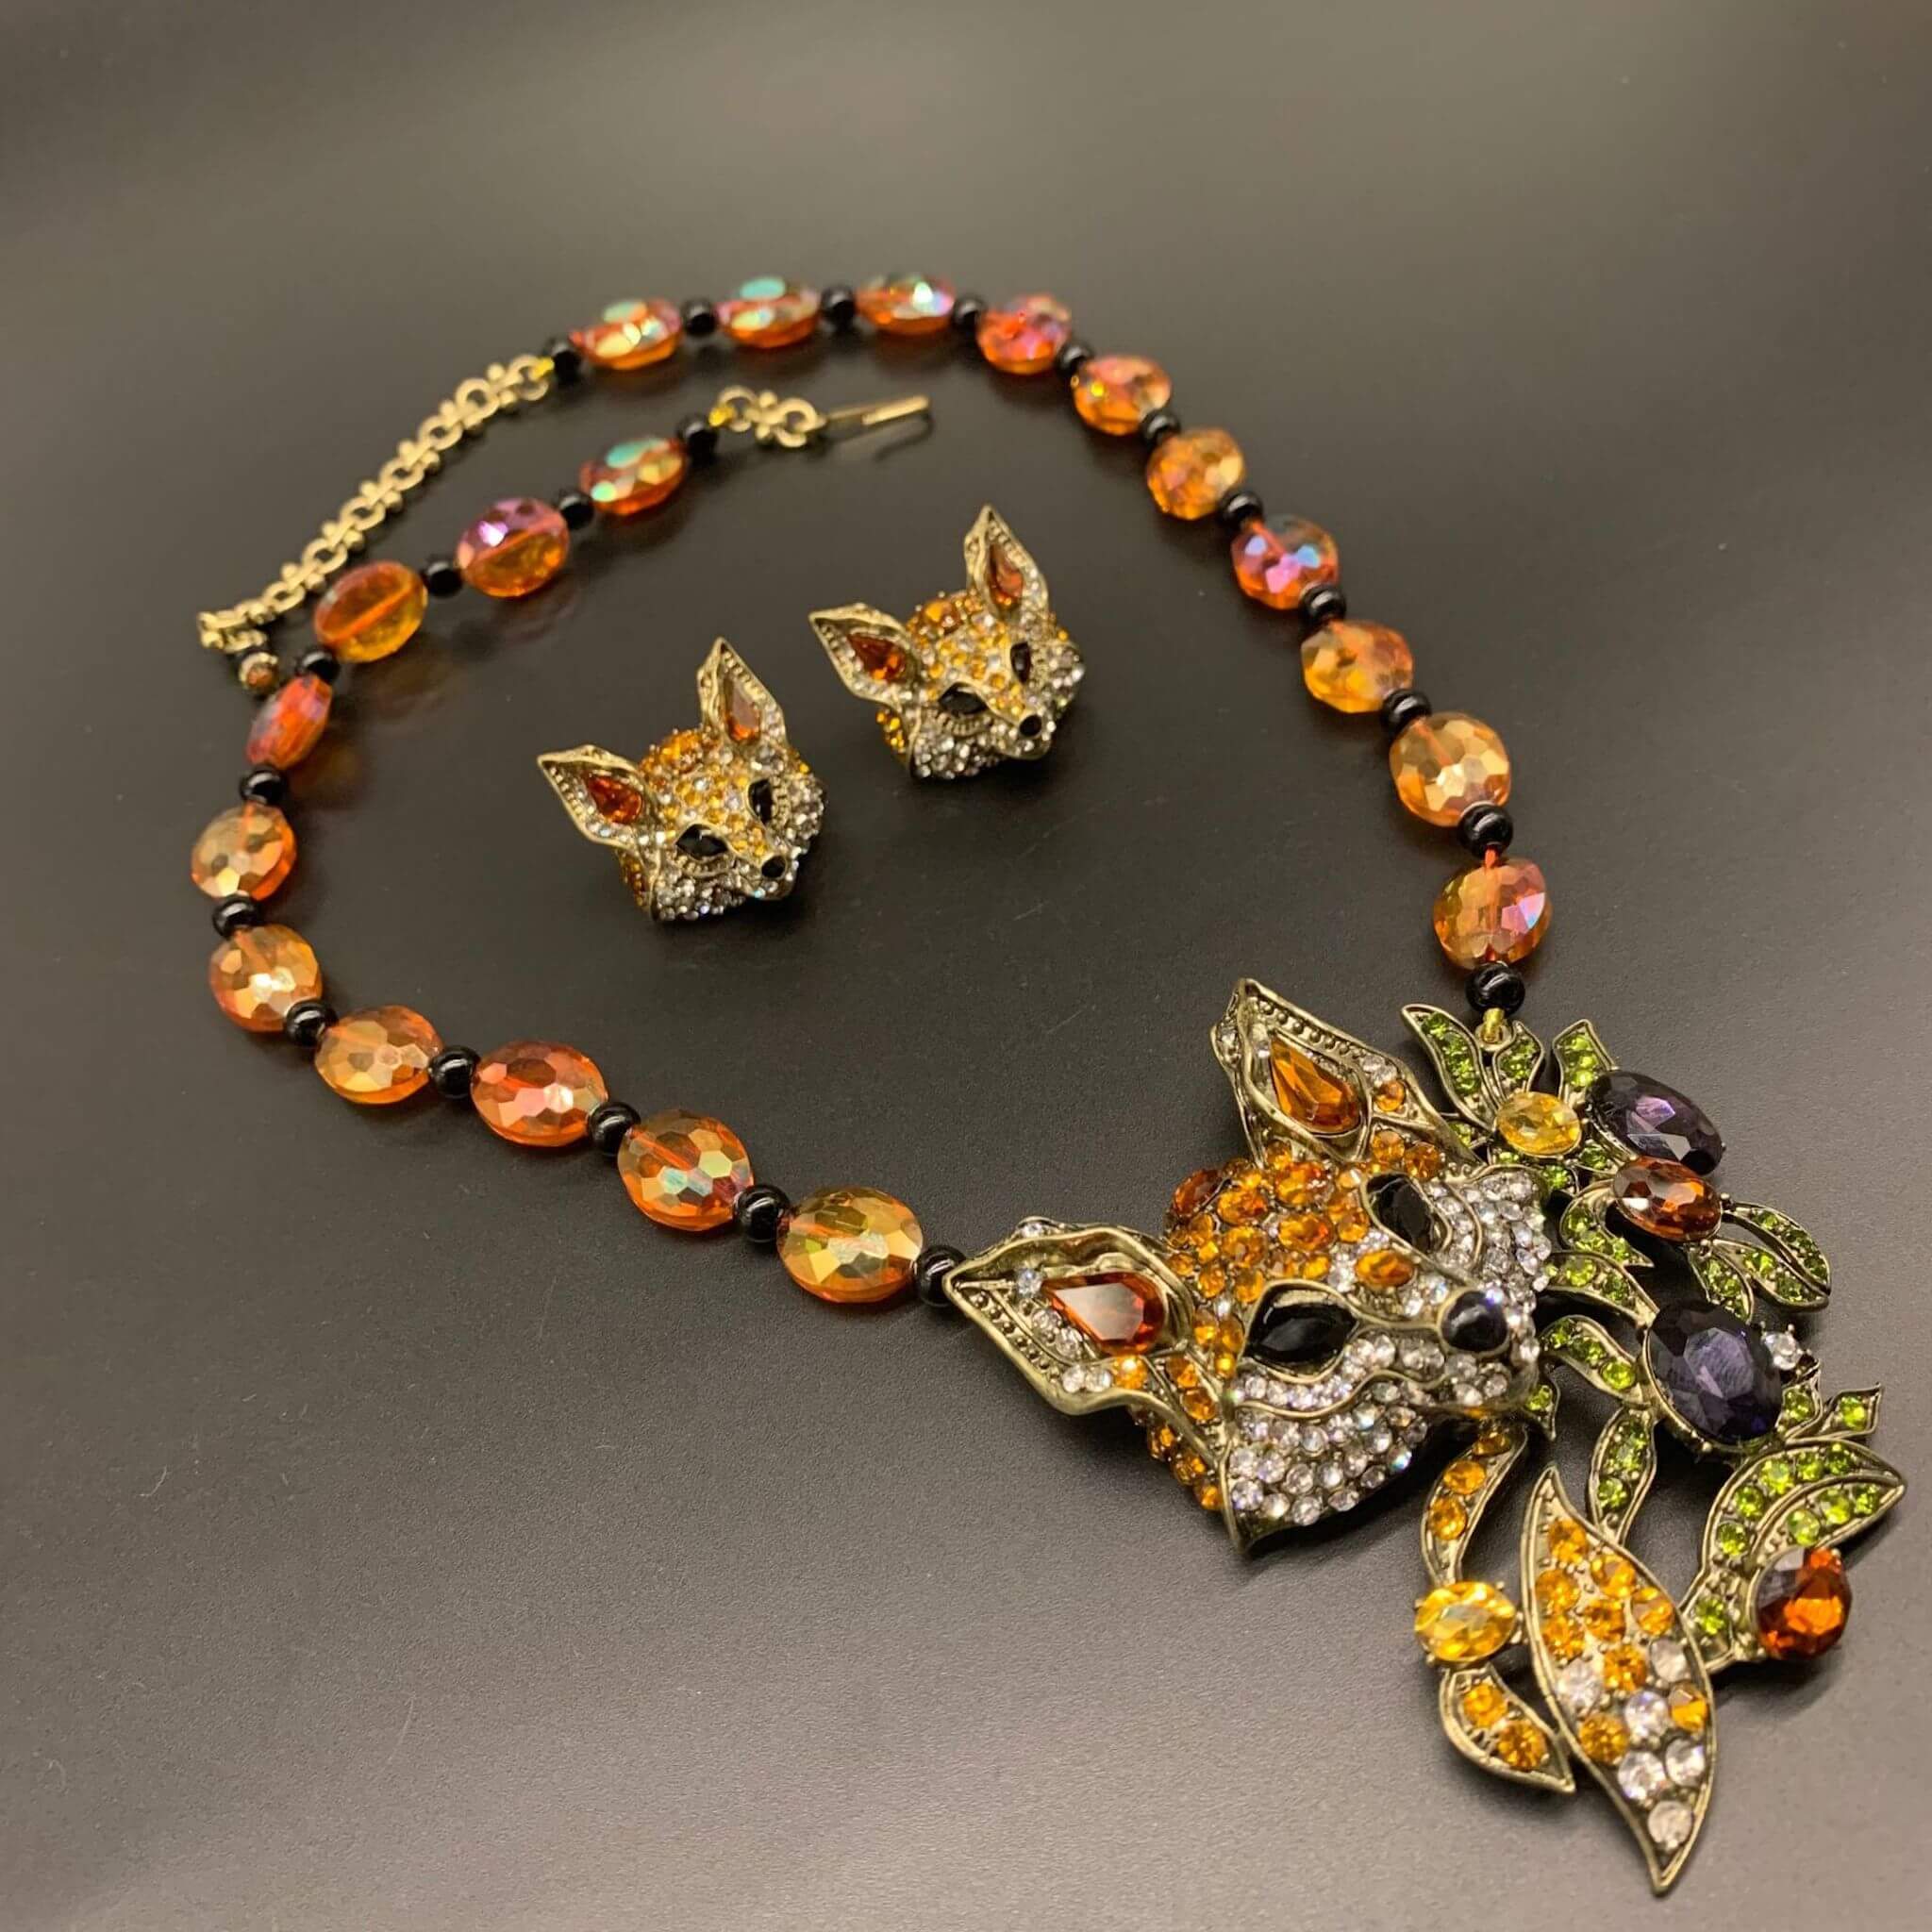 Vintage Glass Fox Pendant Necklace - Artistic Retro Charm  UponBasics   